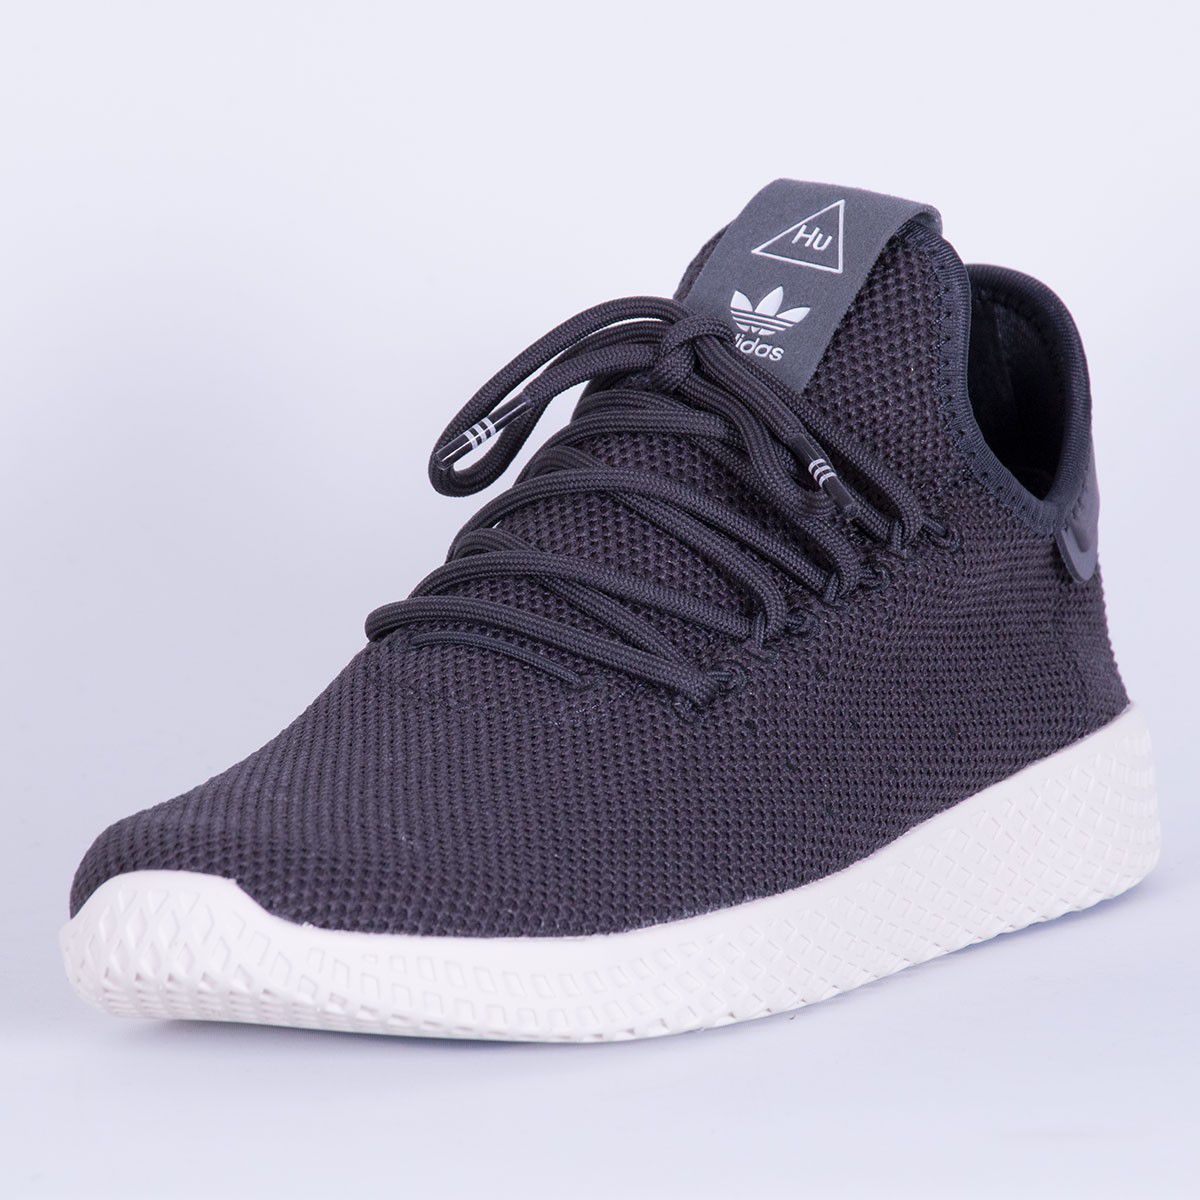 Adidas BRIZO Pharrell williams Hu Sneakers Black Casual Shoes - Buy ...